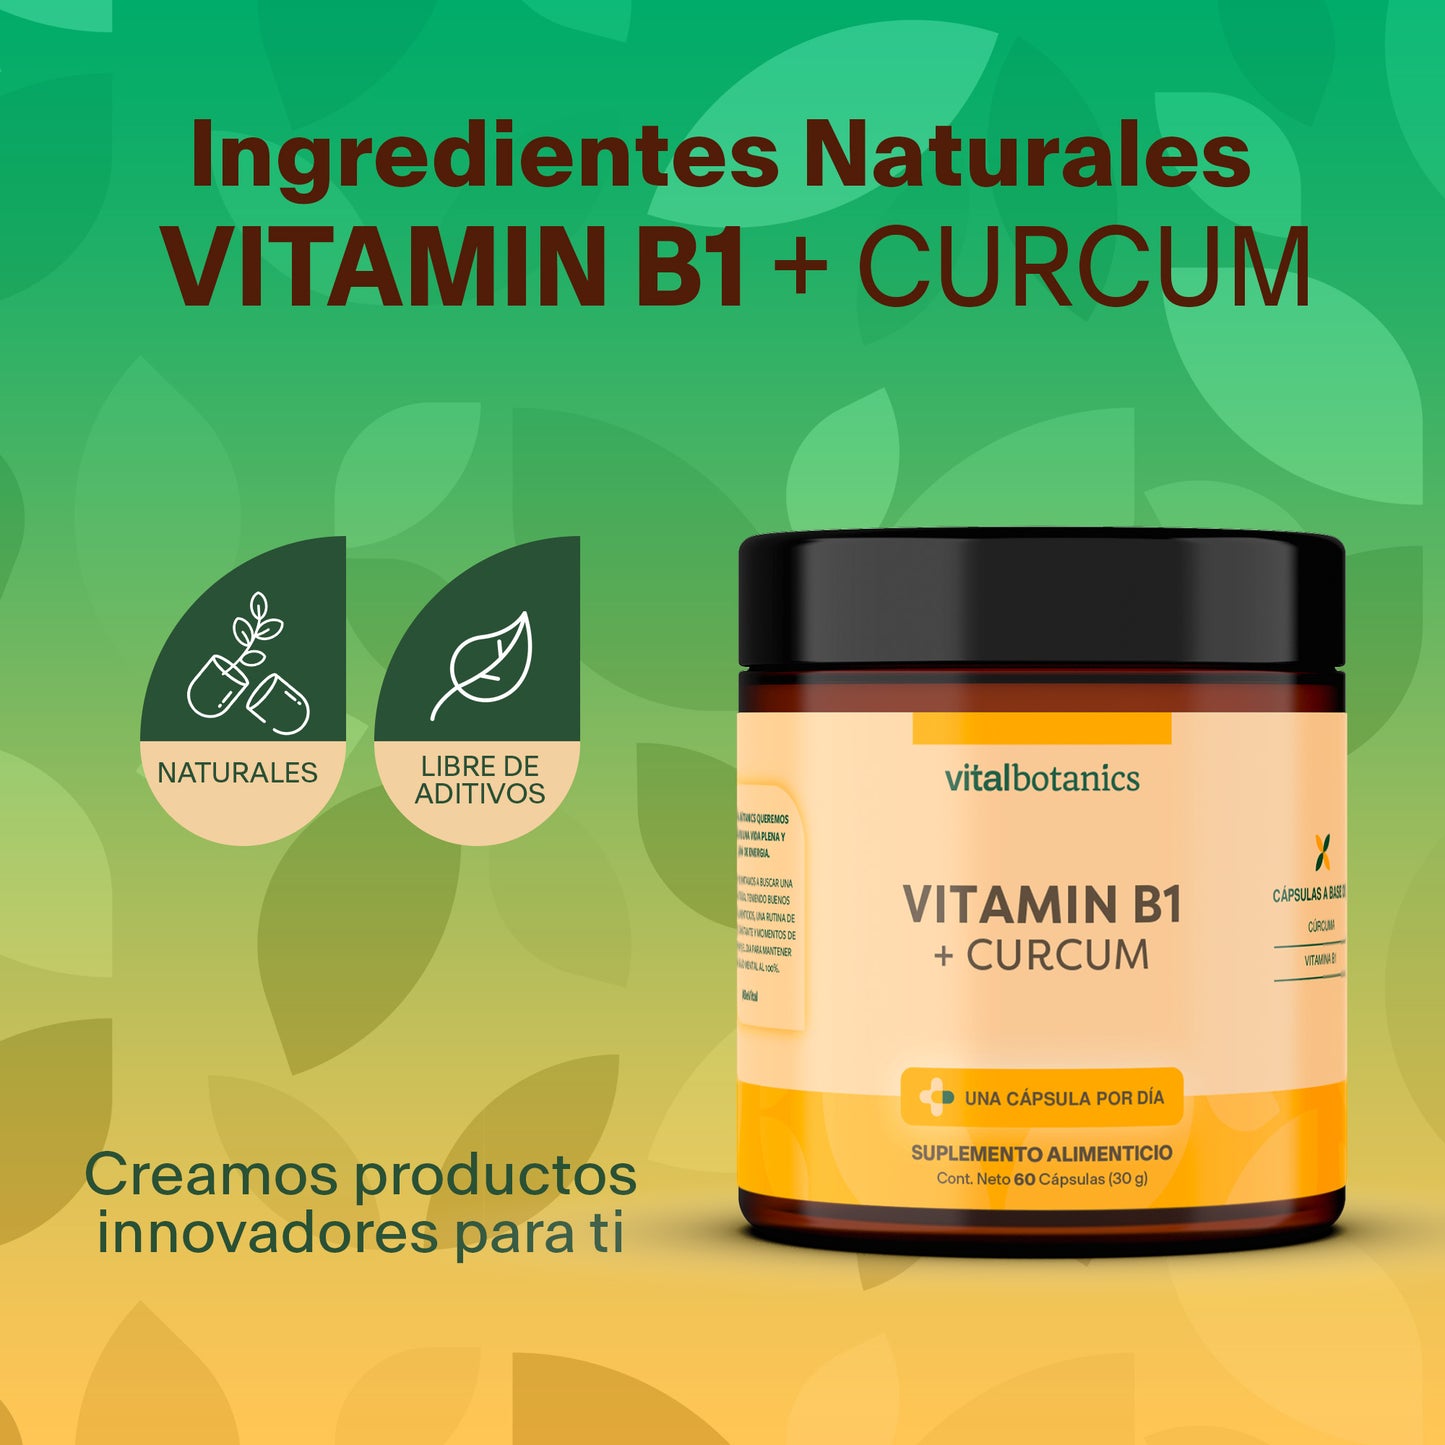 VITAMIN B1 + CURCUM | 200 cápsulas de 500mg